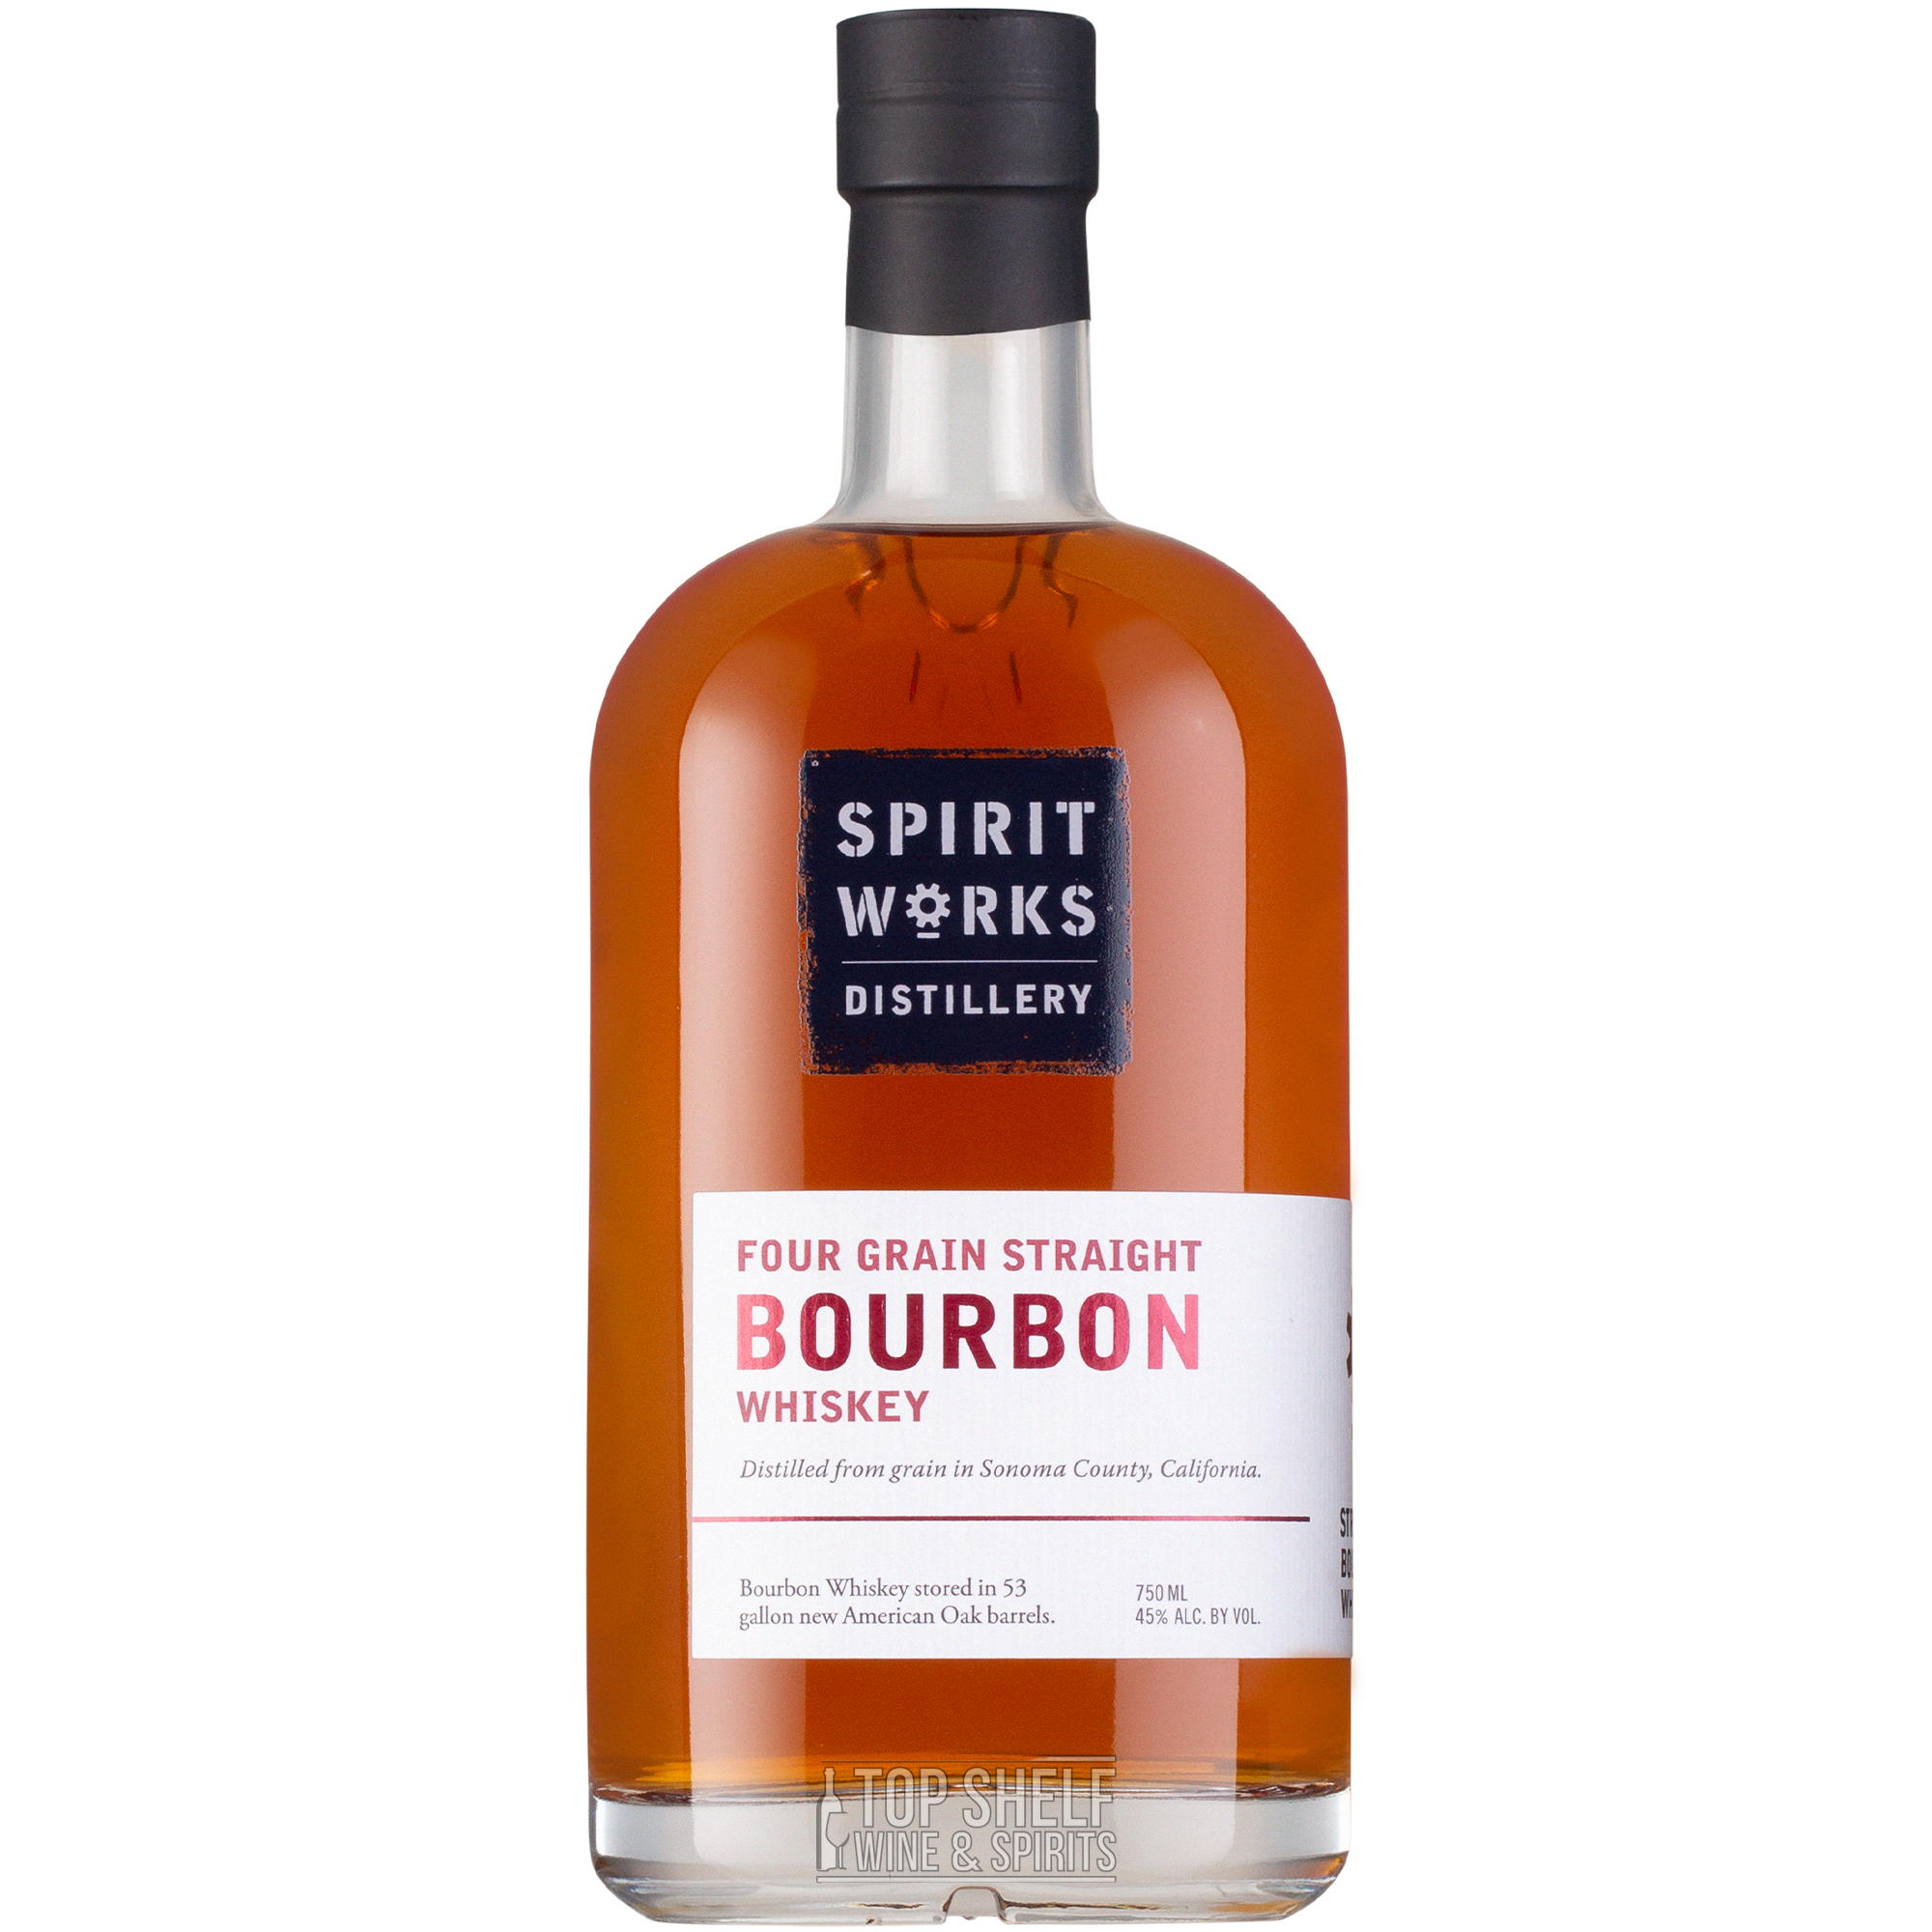 Spirits Works Distillery Four Grain Straight Bourbon Whiskey